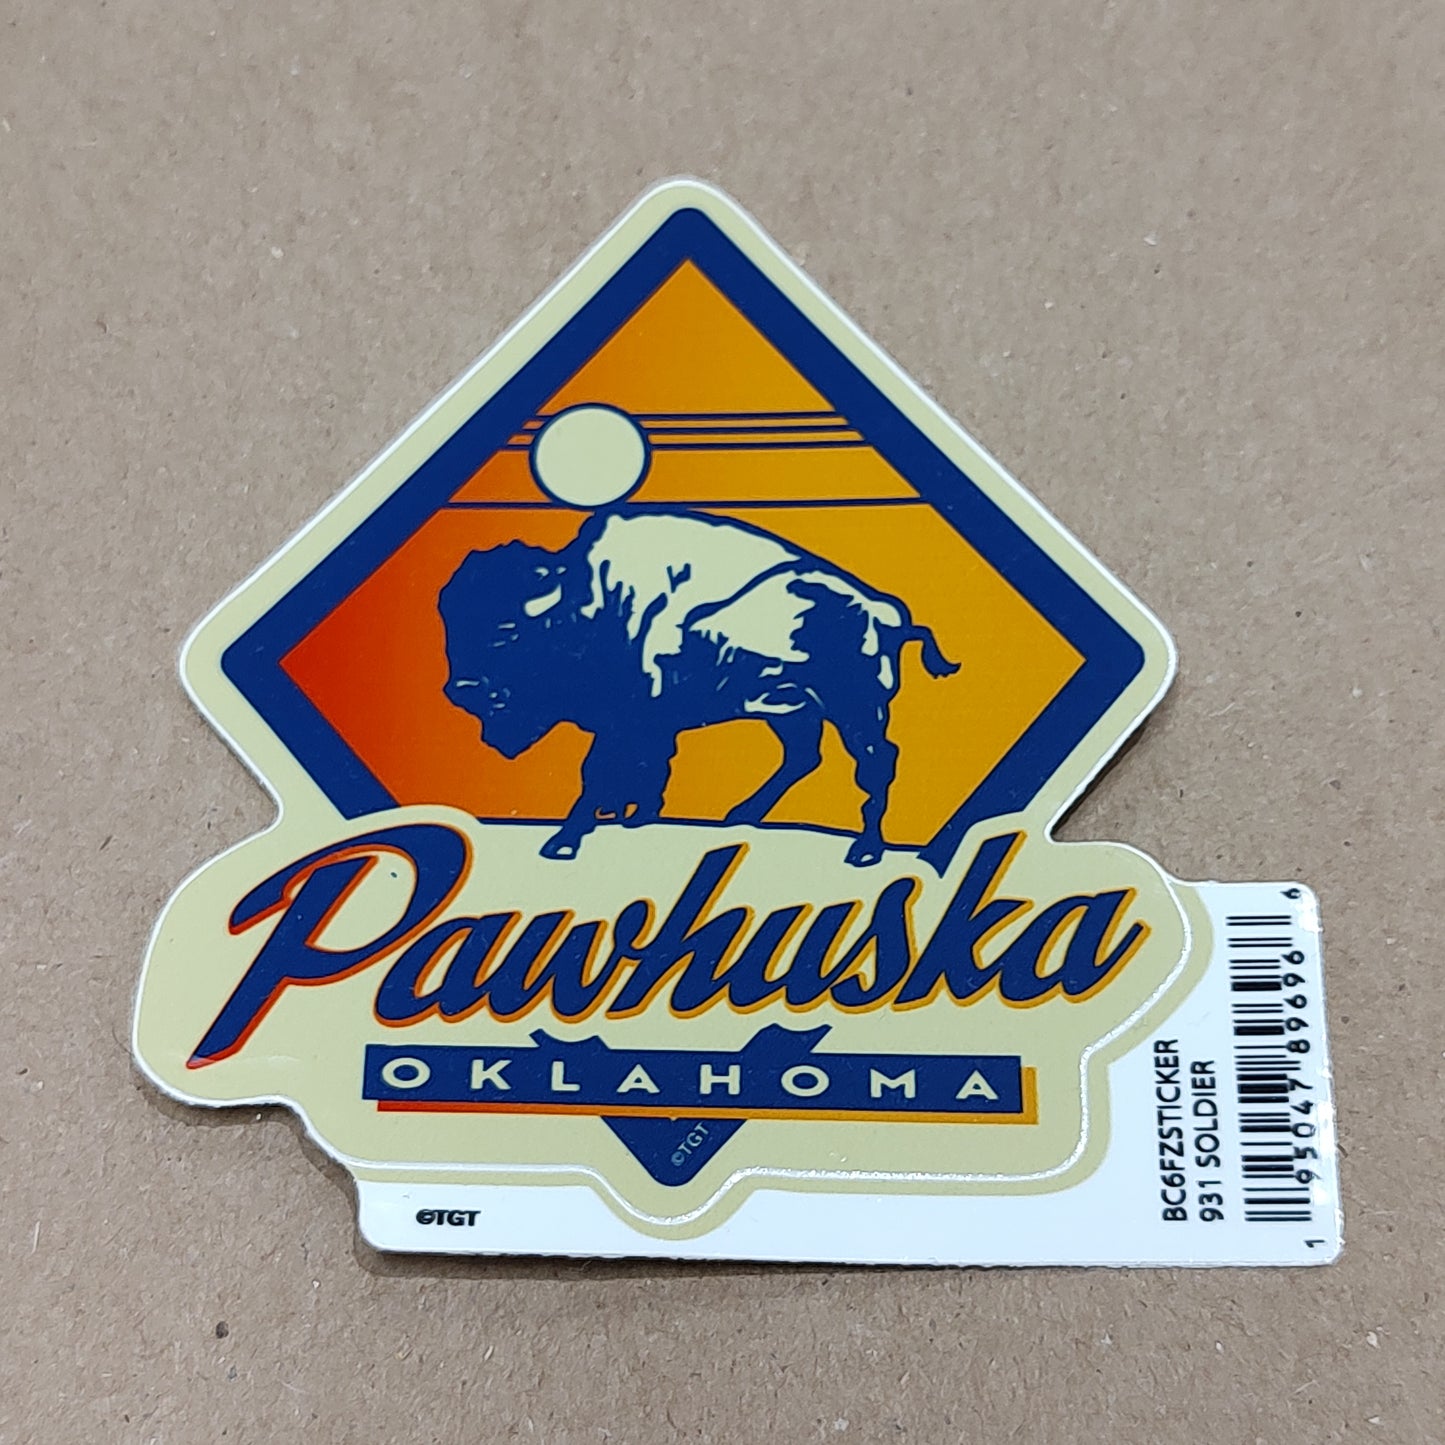 Pawhuska Oklahoma Sunset with Buffalo- sticker